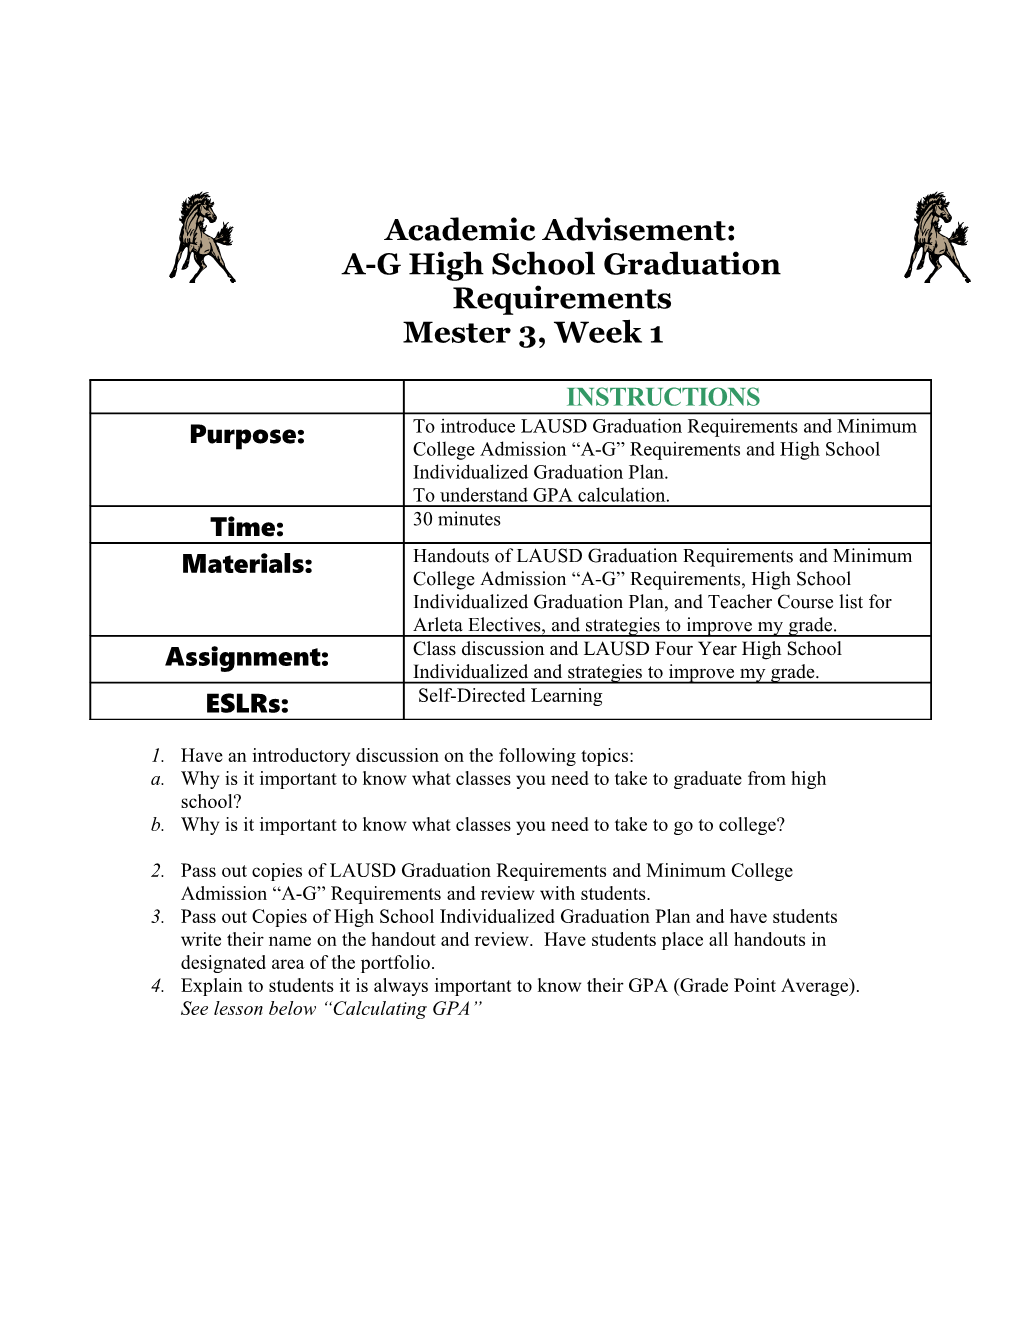 A-G High School Graduation Requirements